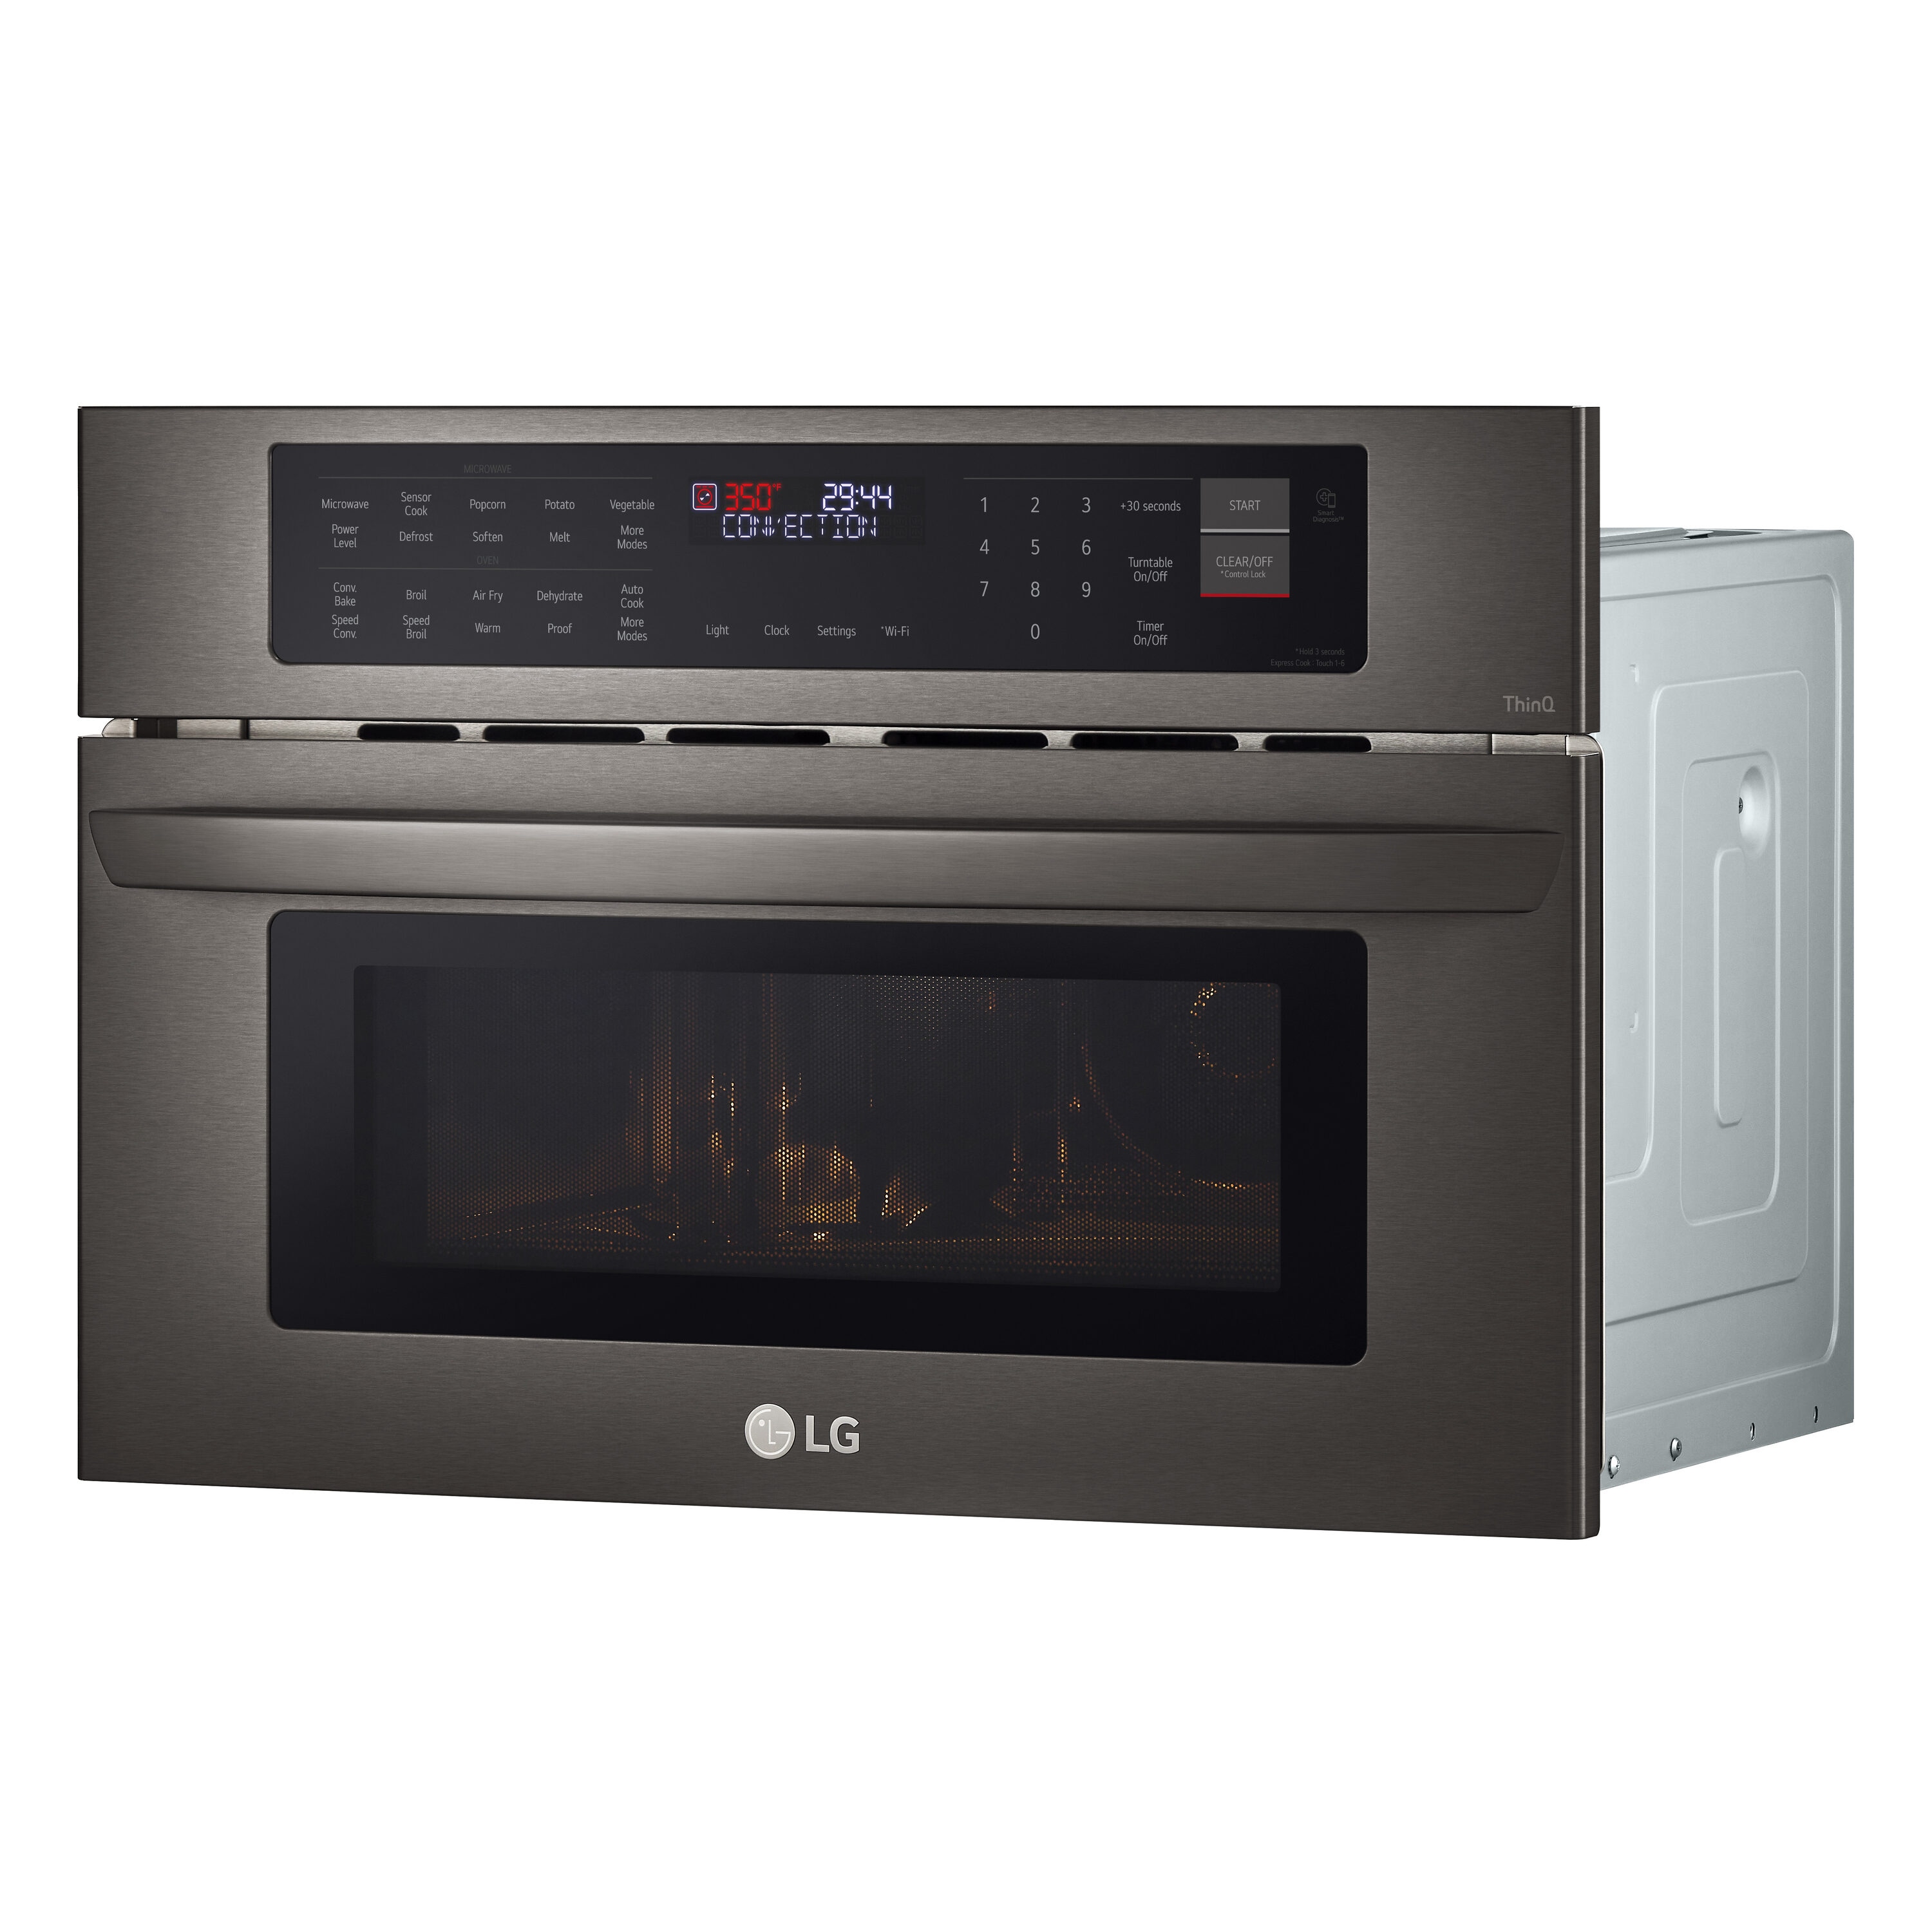 LG 30 Trim Kit for LG Microwaves - Stainless steel